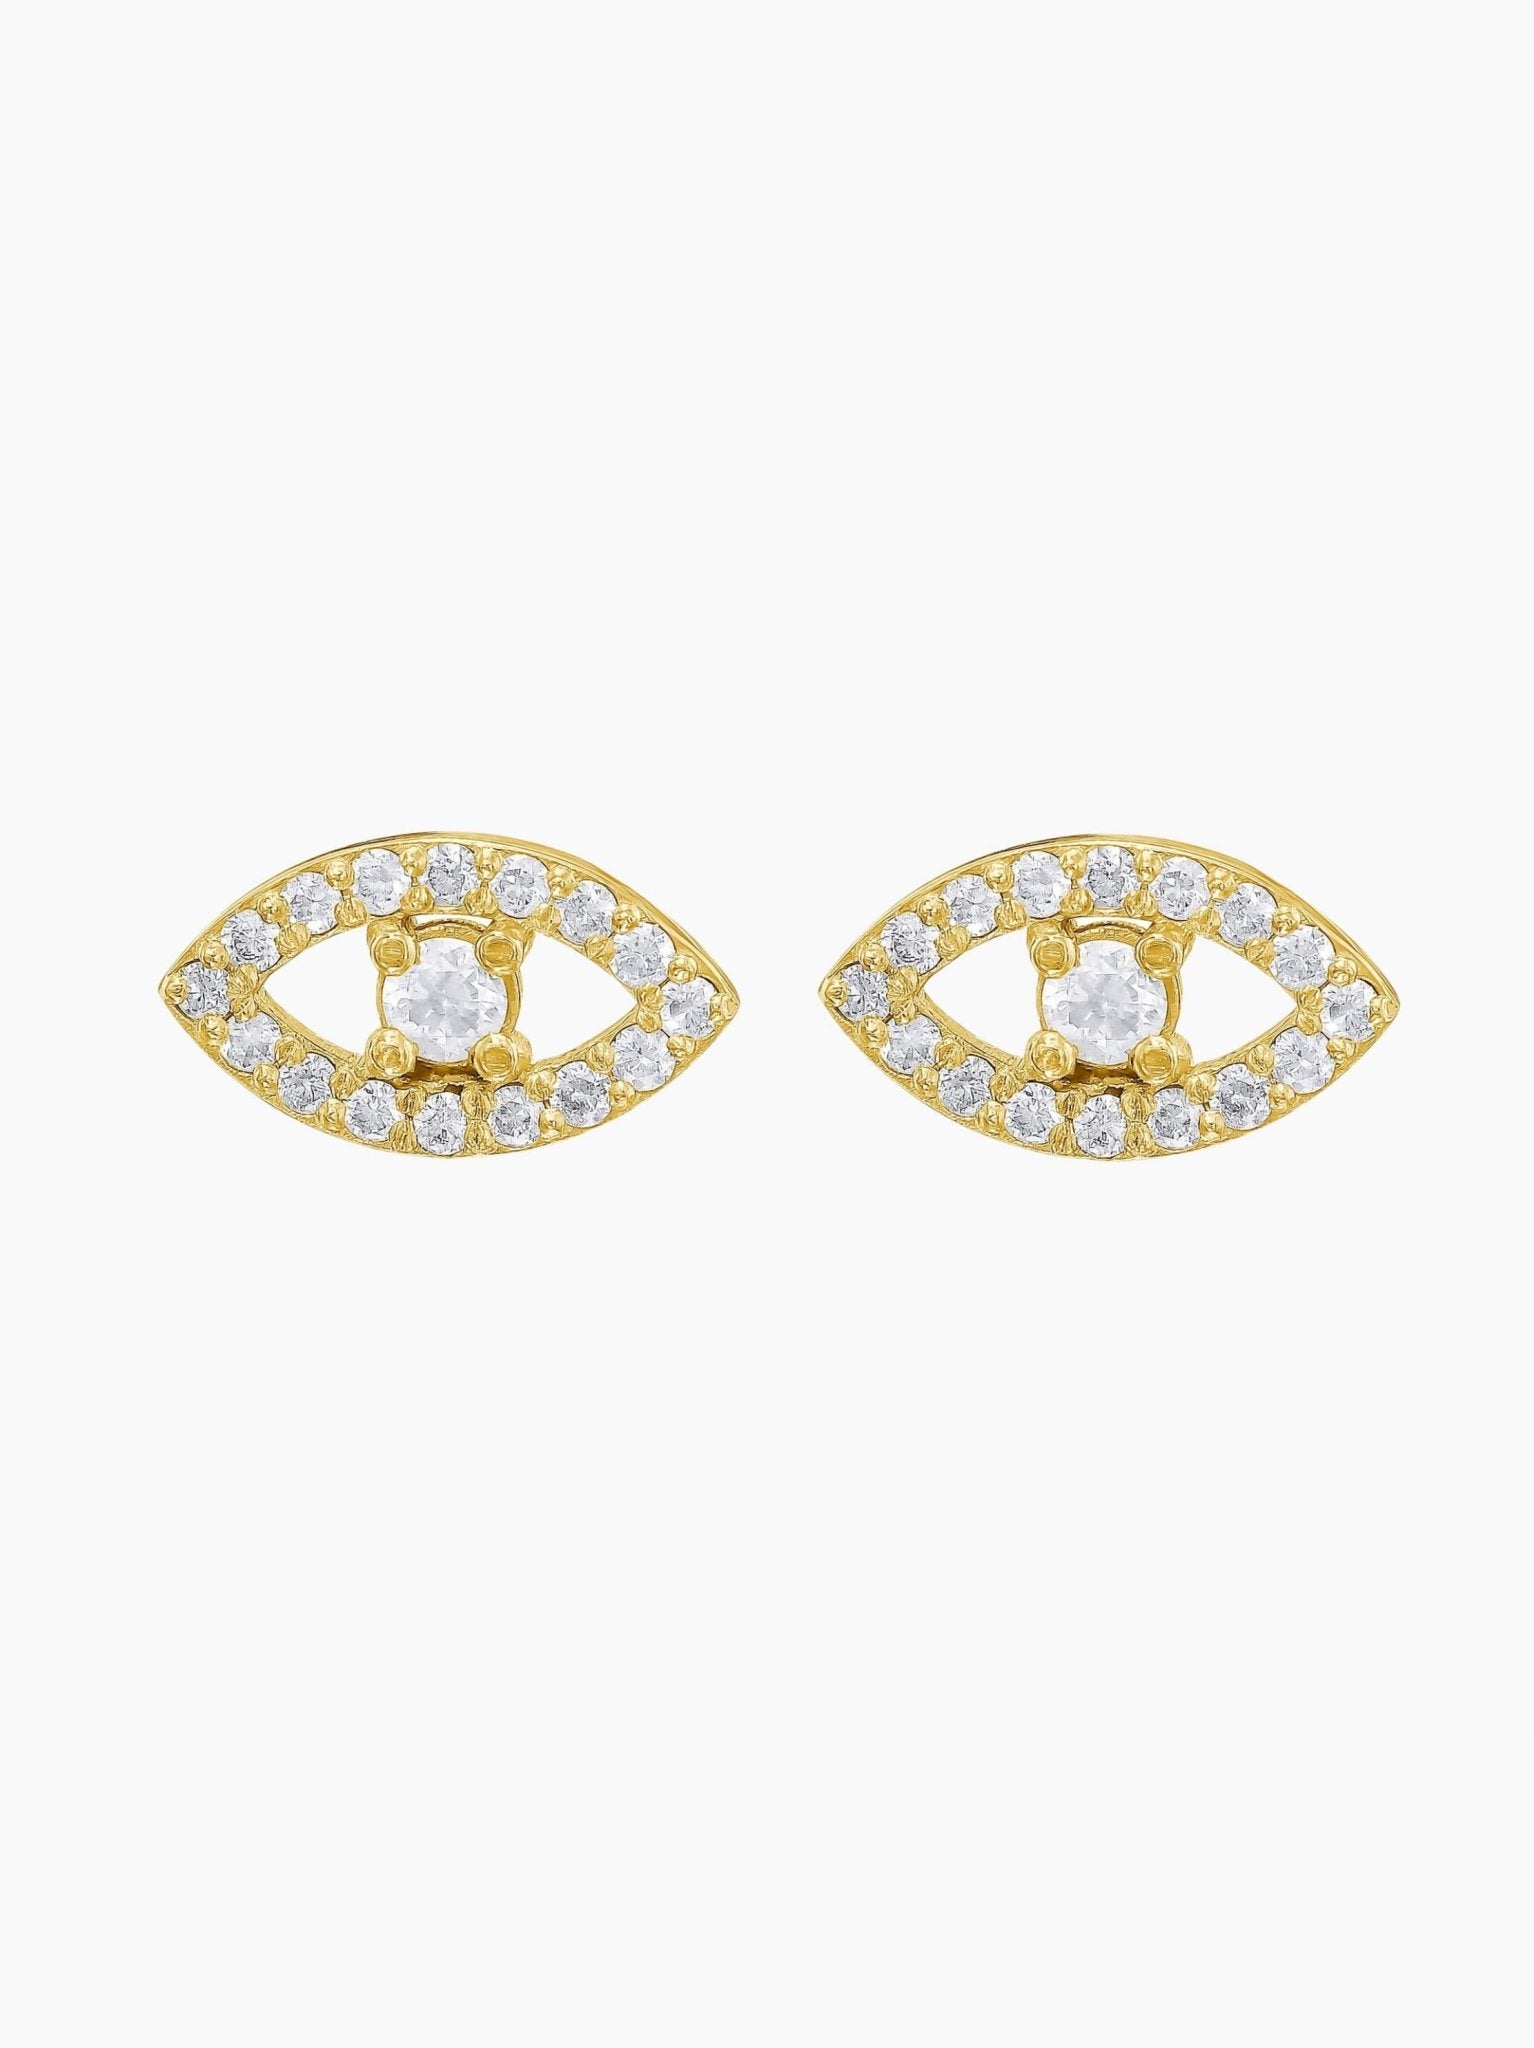 Sharon Eye Diamond Earring in Yellow Gold